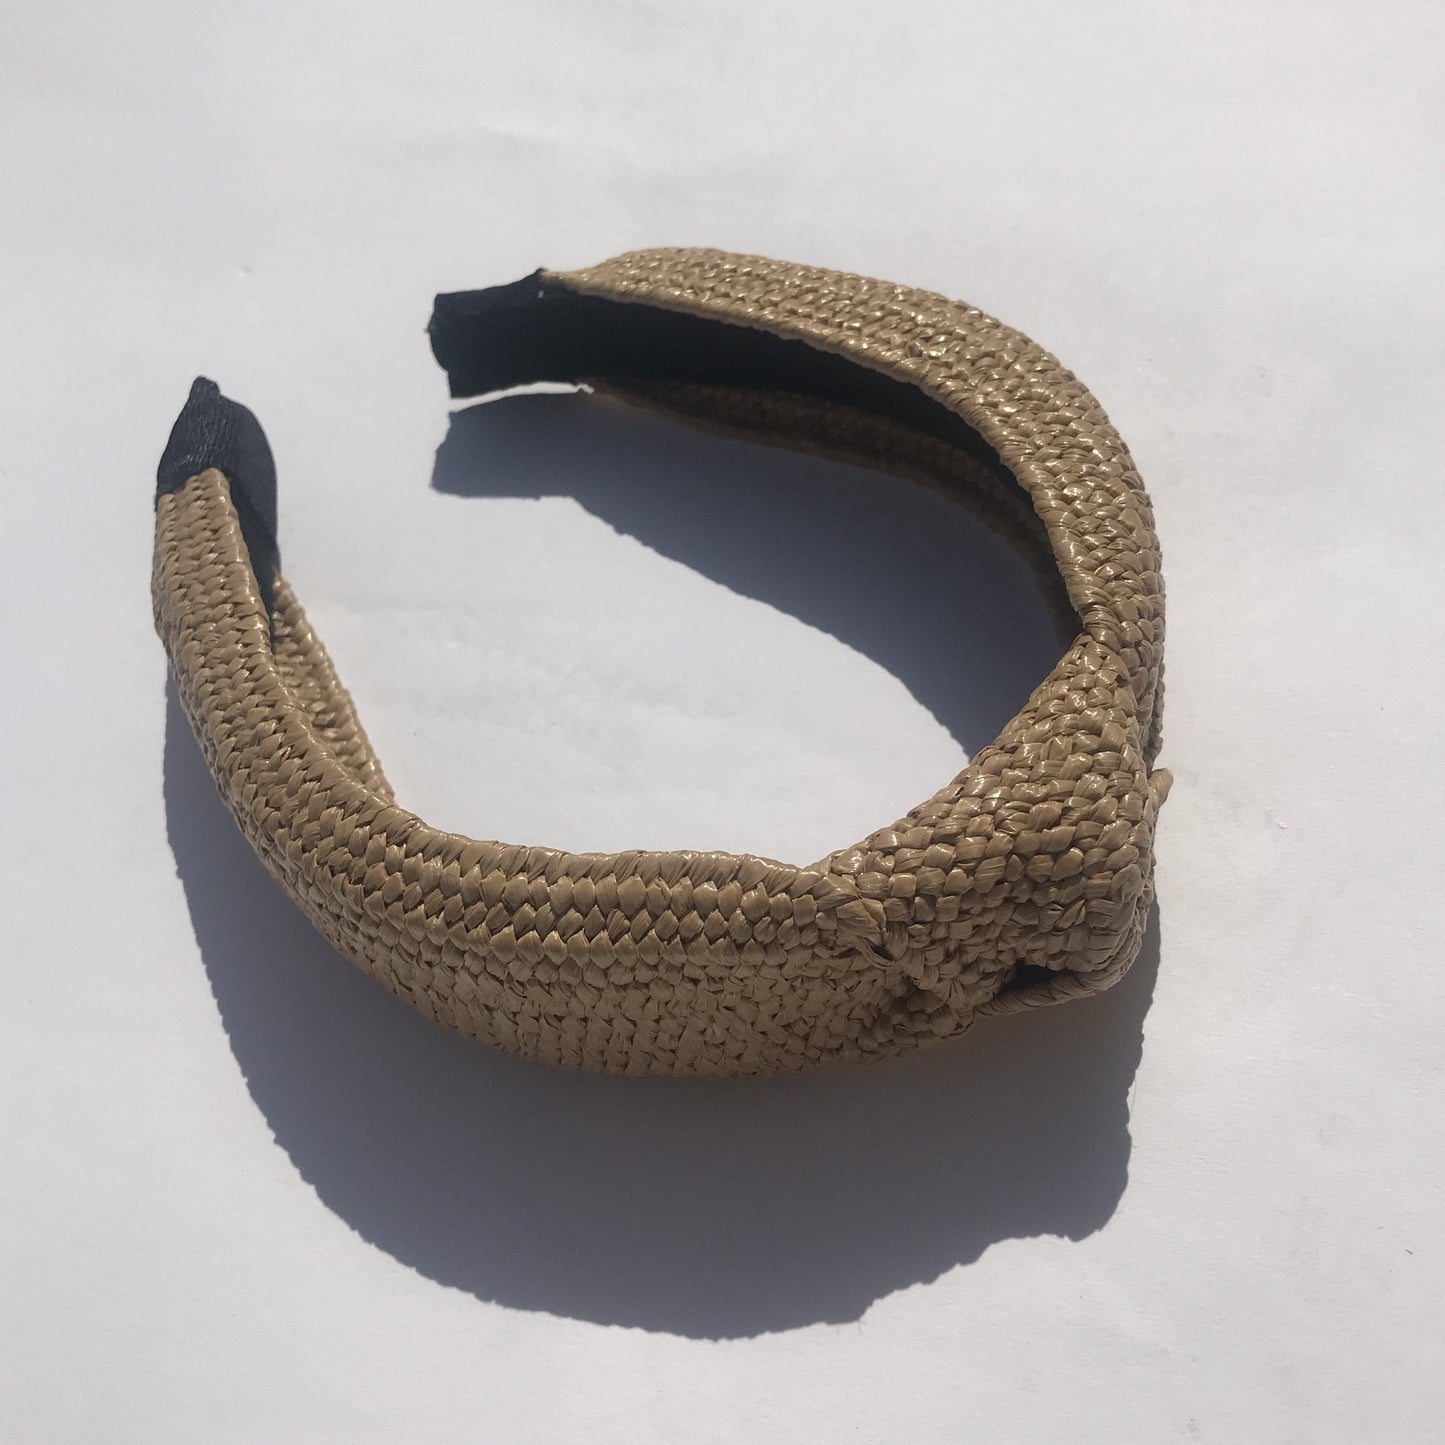 Woven raffia headband